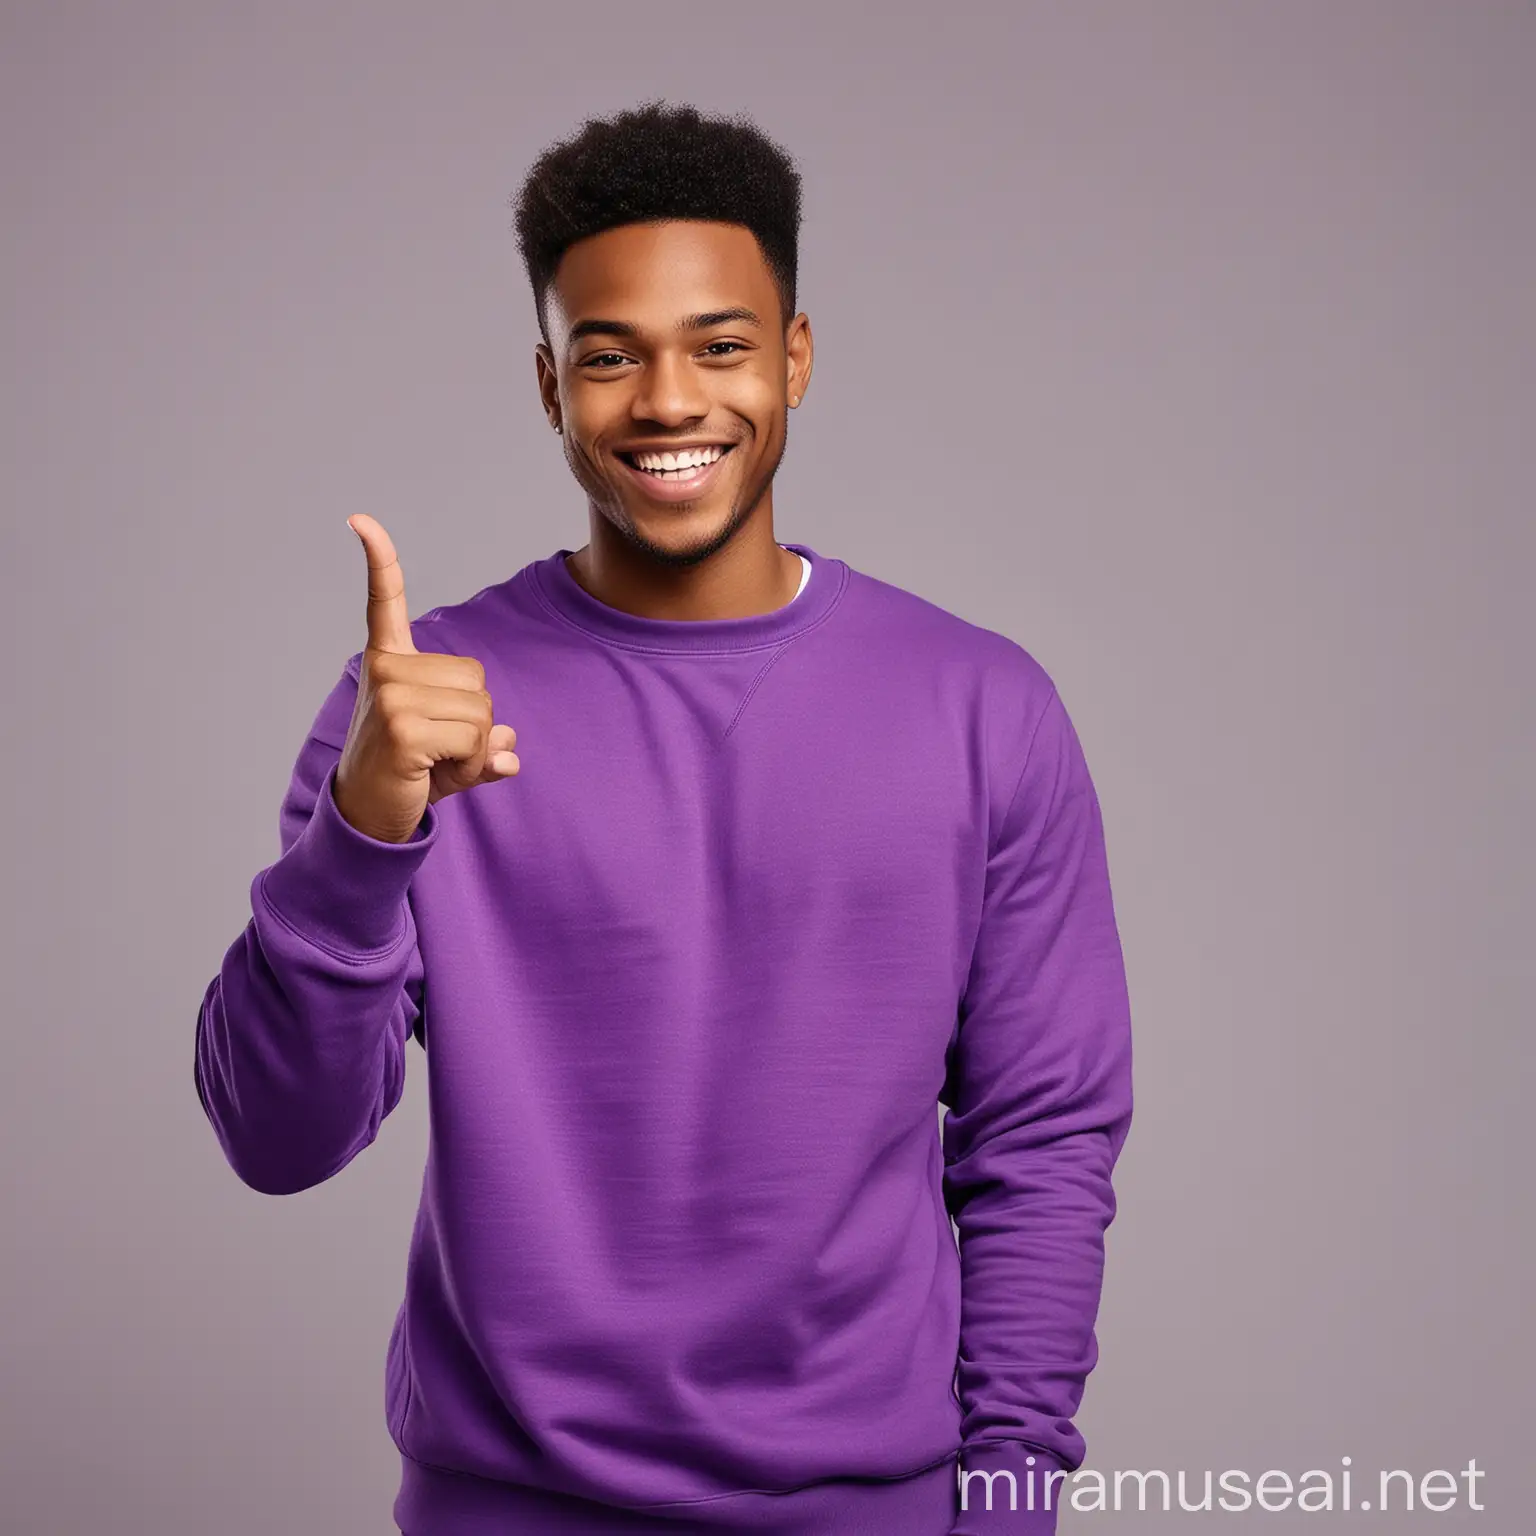 Smiling African American Man in Purple Sweatshirt Pointing at Camera